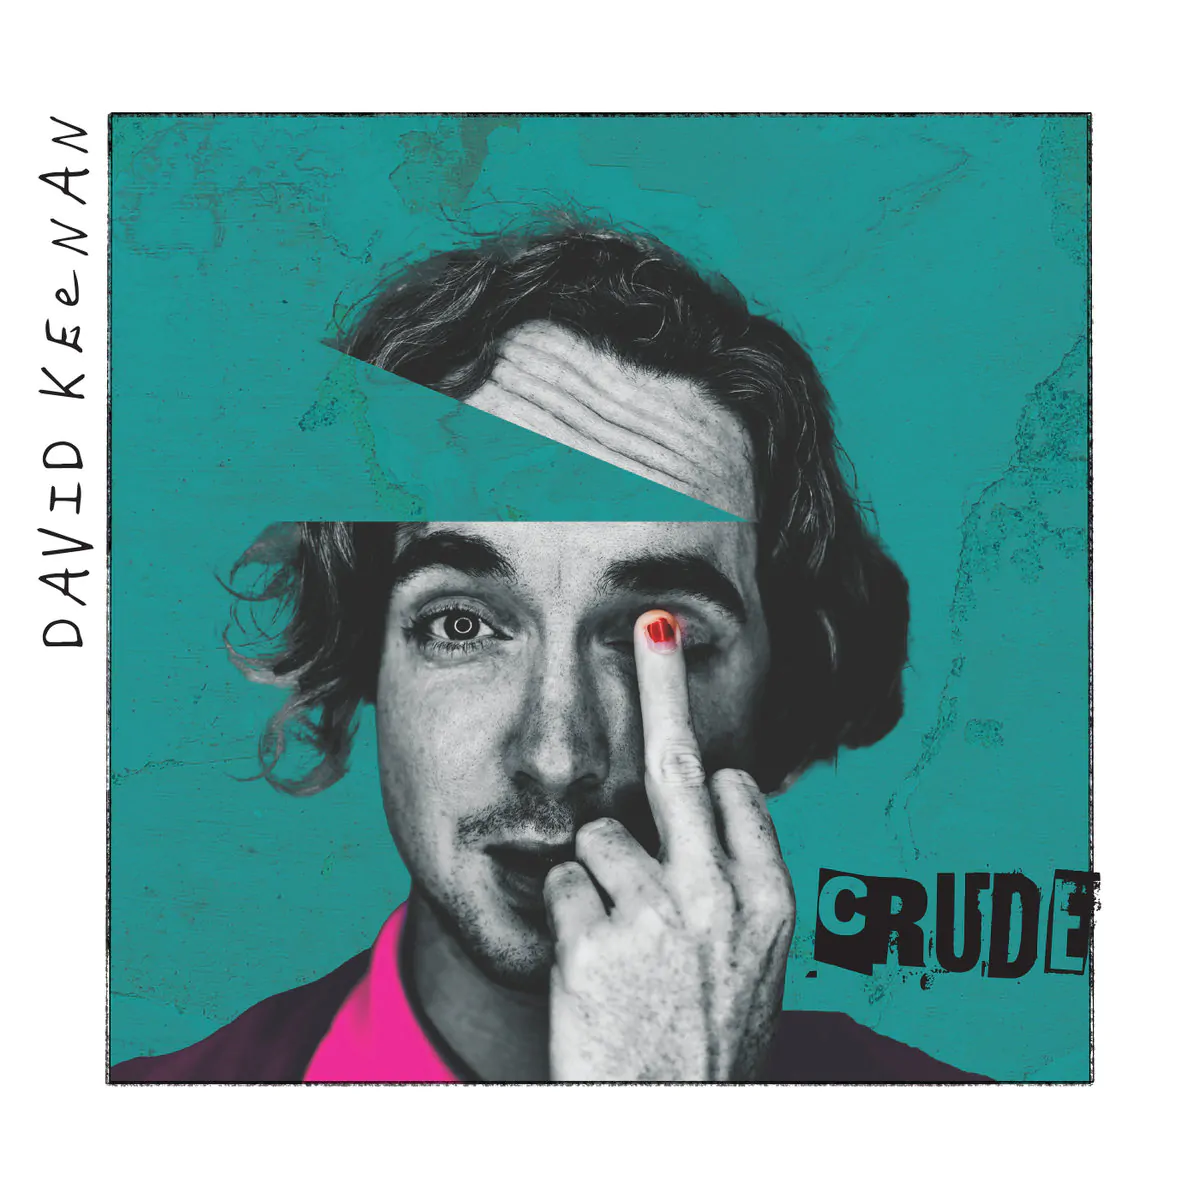 ALBUM REVIEW: David Keenan – Crude